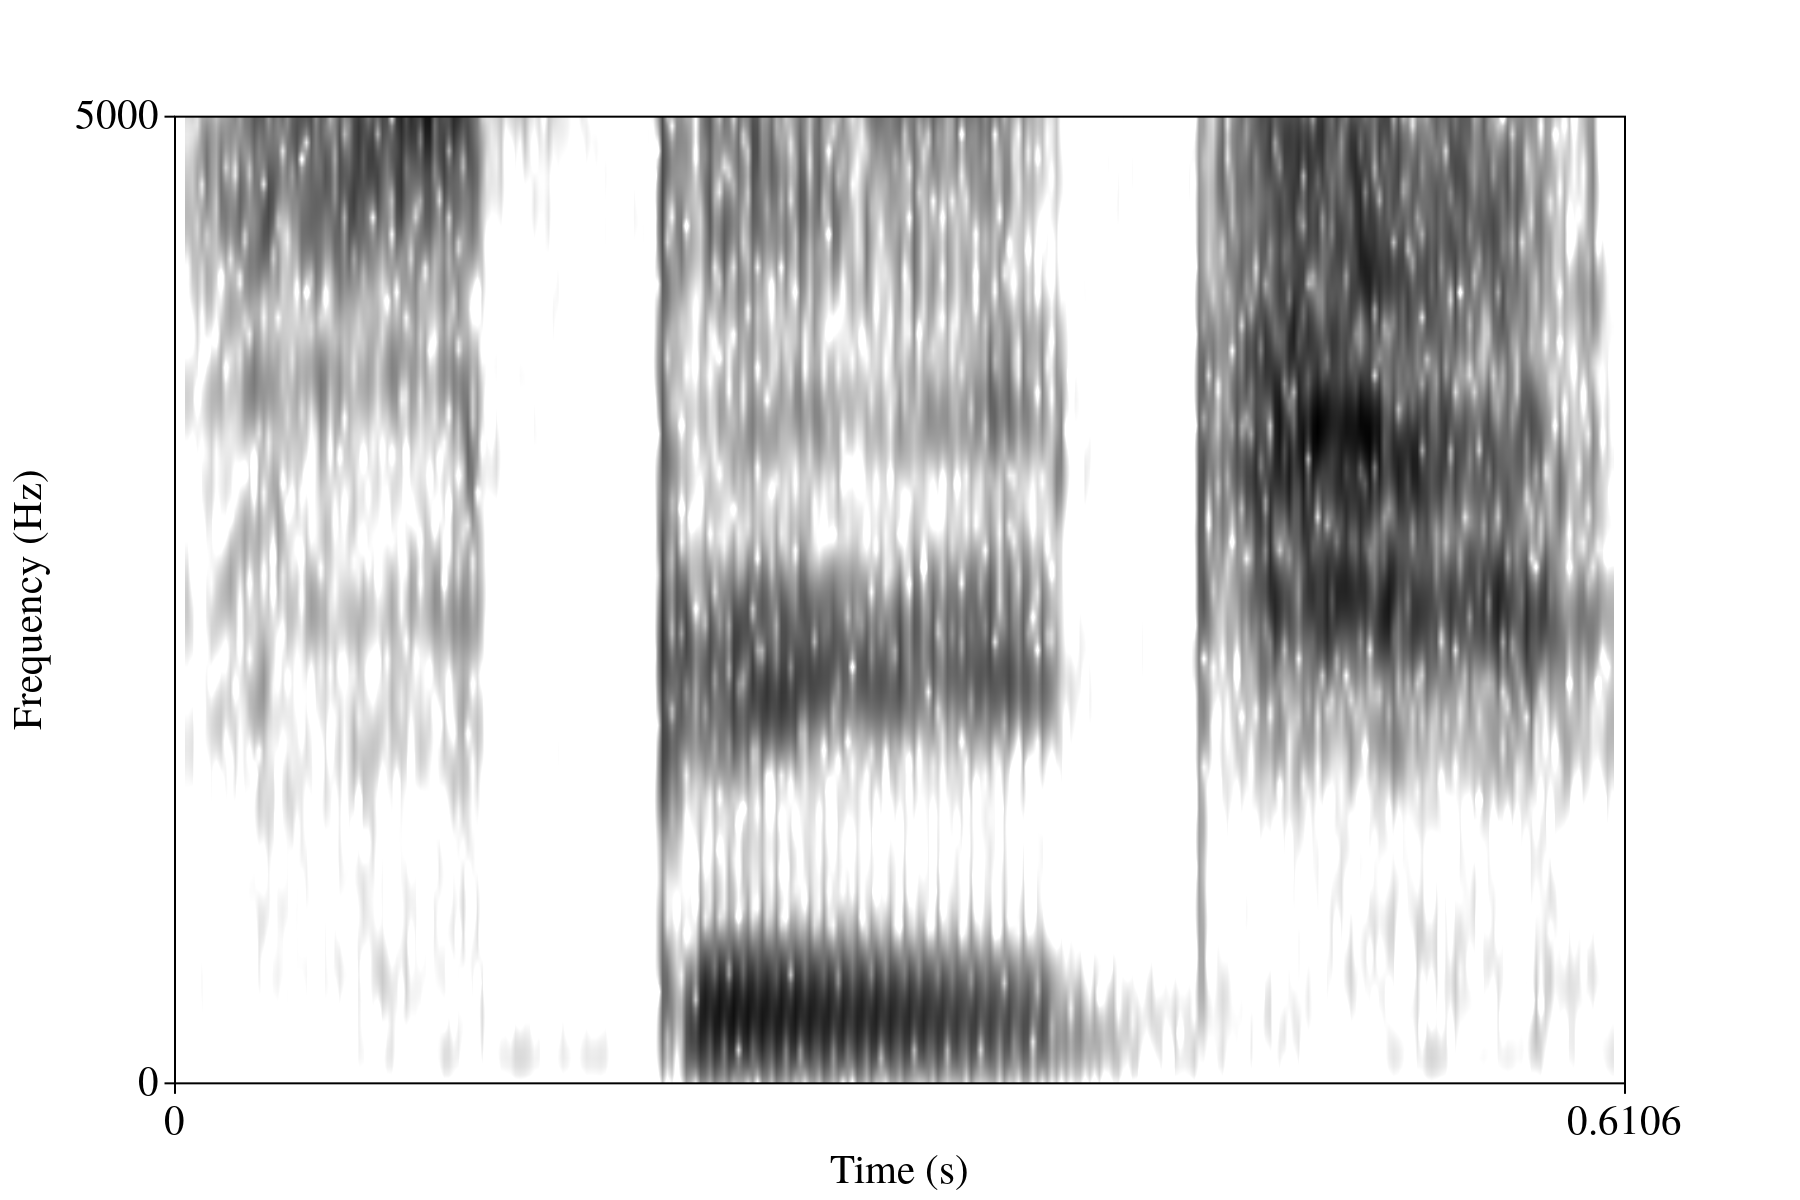 Figure 4: Spectrogram of me saying "speech"